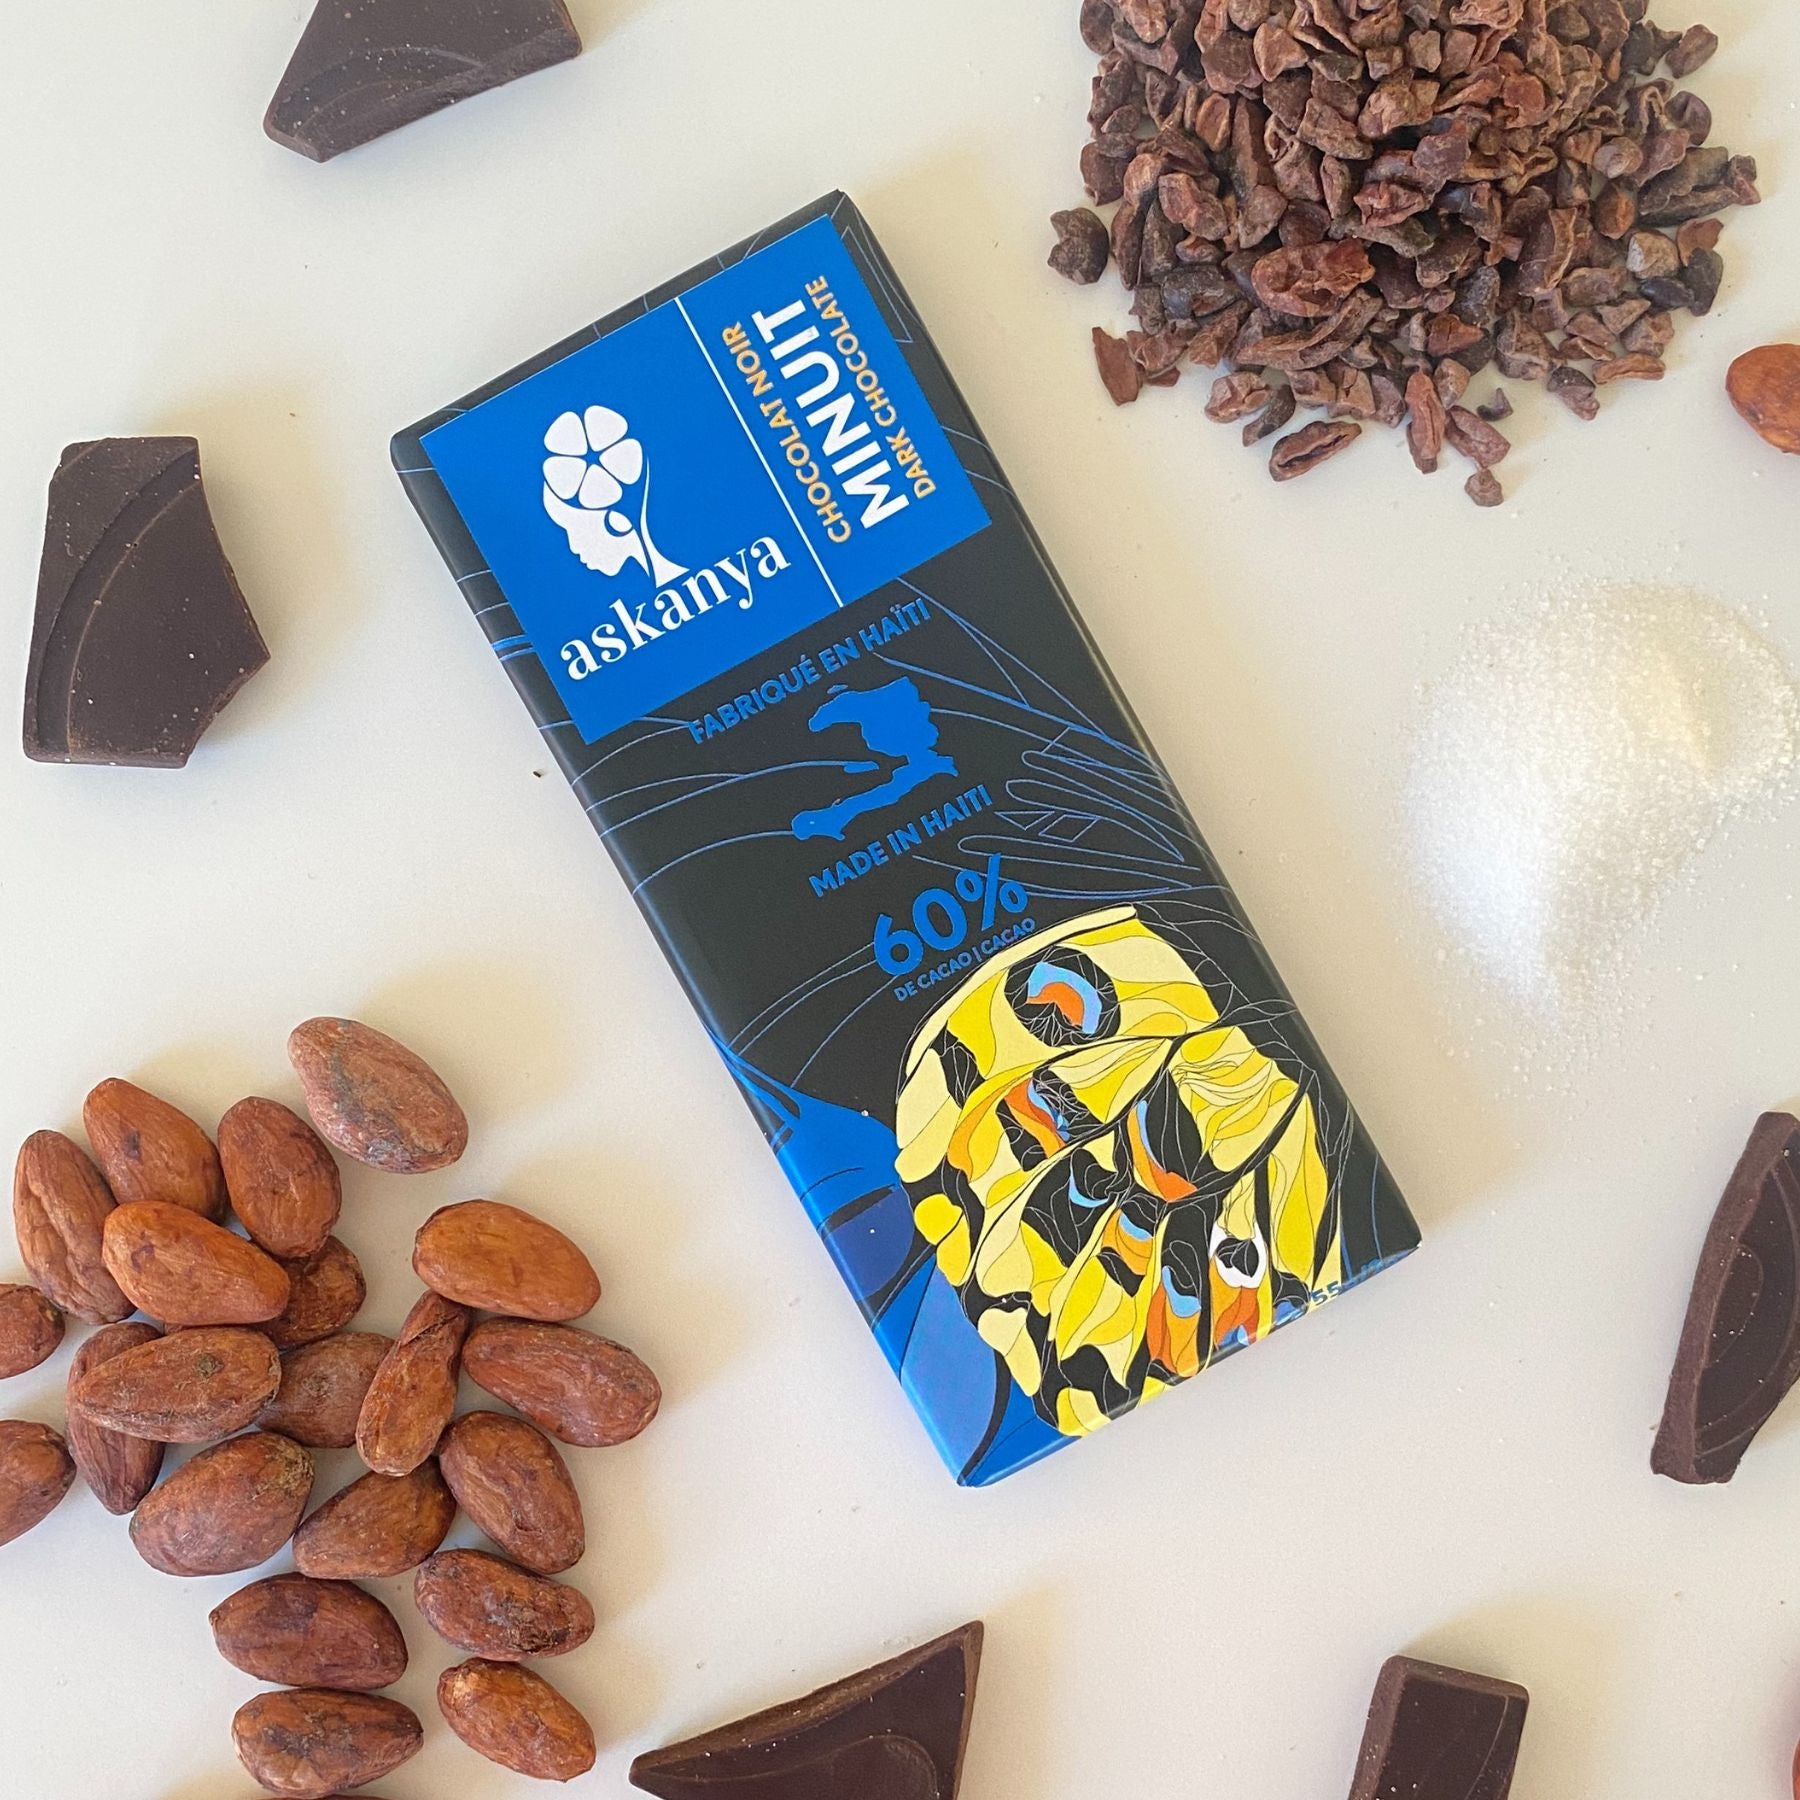 Askanya Chocolate Haiti Single Origin-Made 60% Cacao Content Two Ingredients Dark Chocolate made with Rapadou Artisanal Cane Sugar